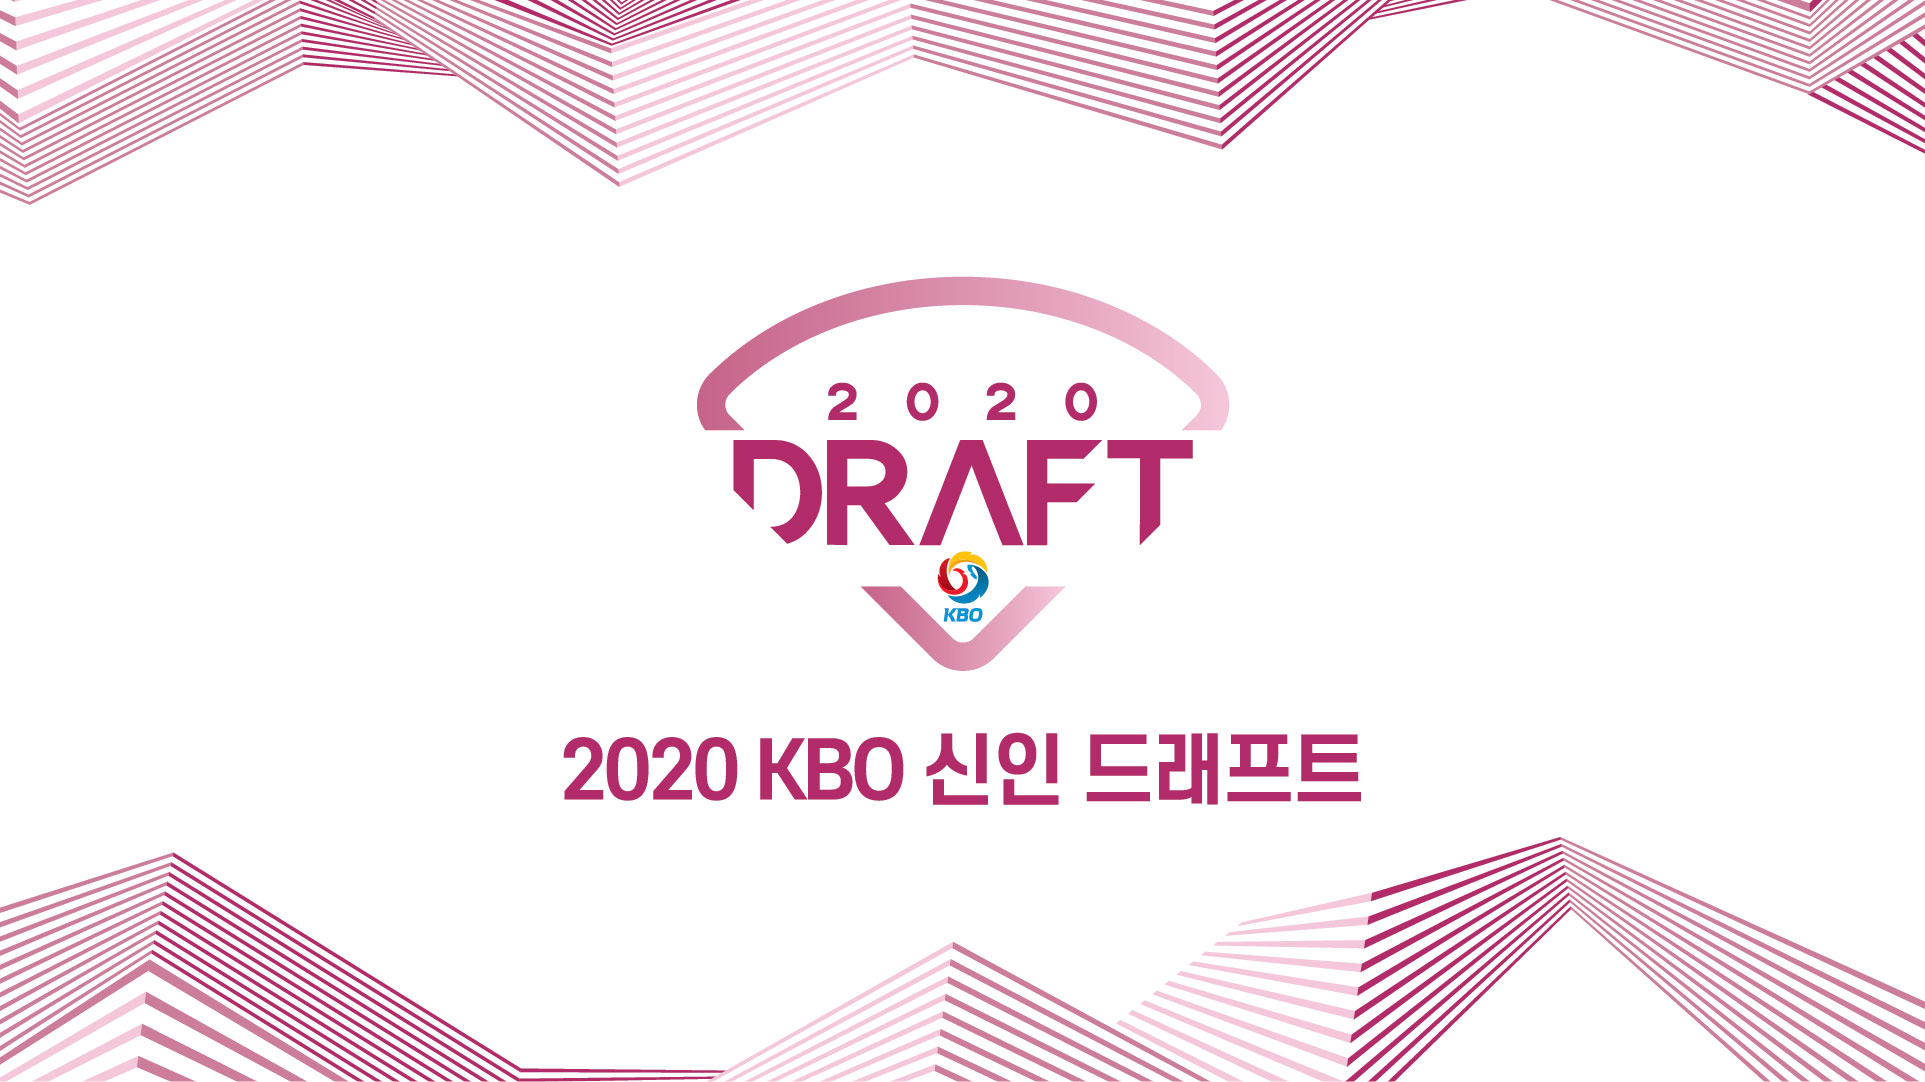 2020 KBO 신인 드래프트 엠블럼.jpg